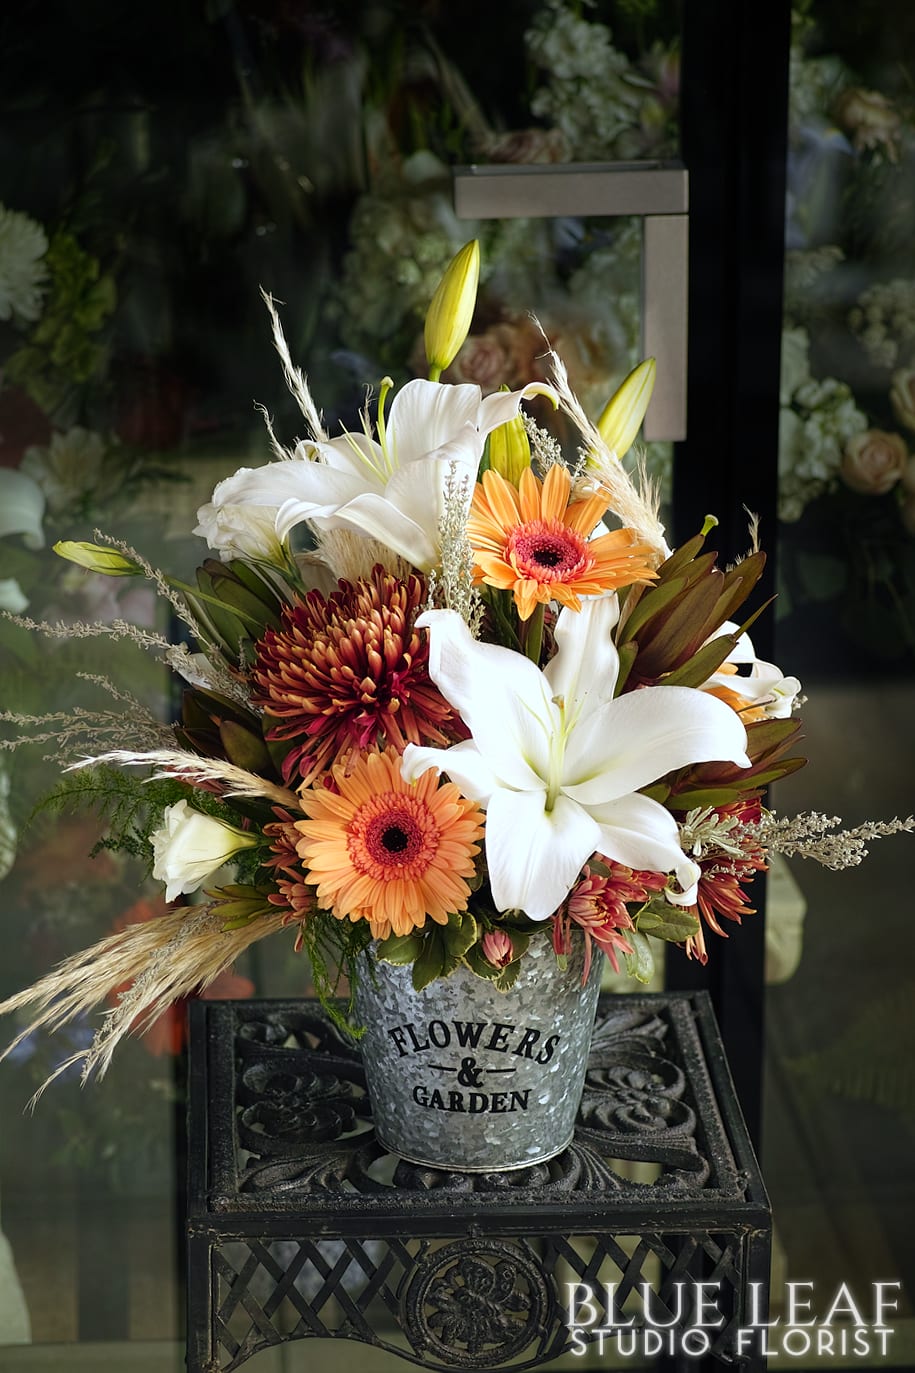 A festive fall arrangement designed in a galvanized tin. Bright white lilies